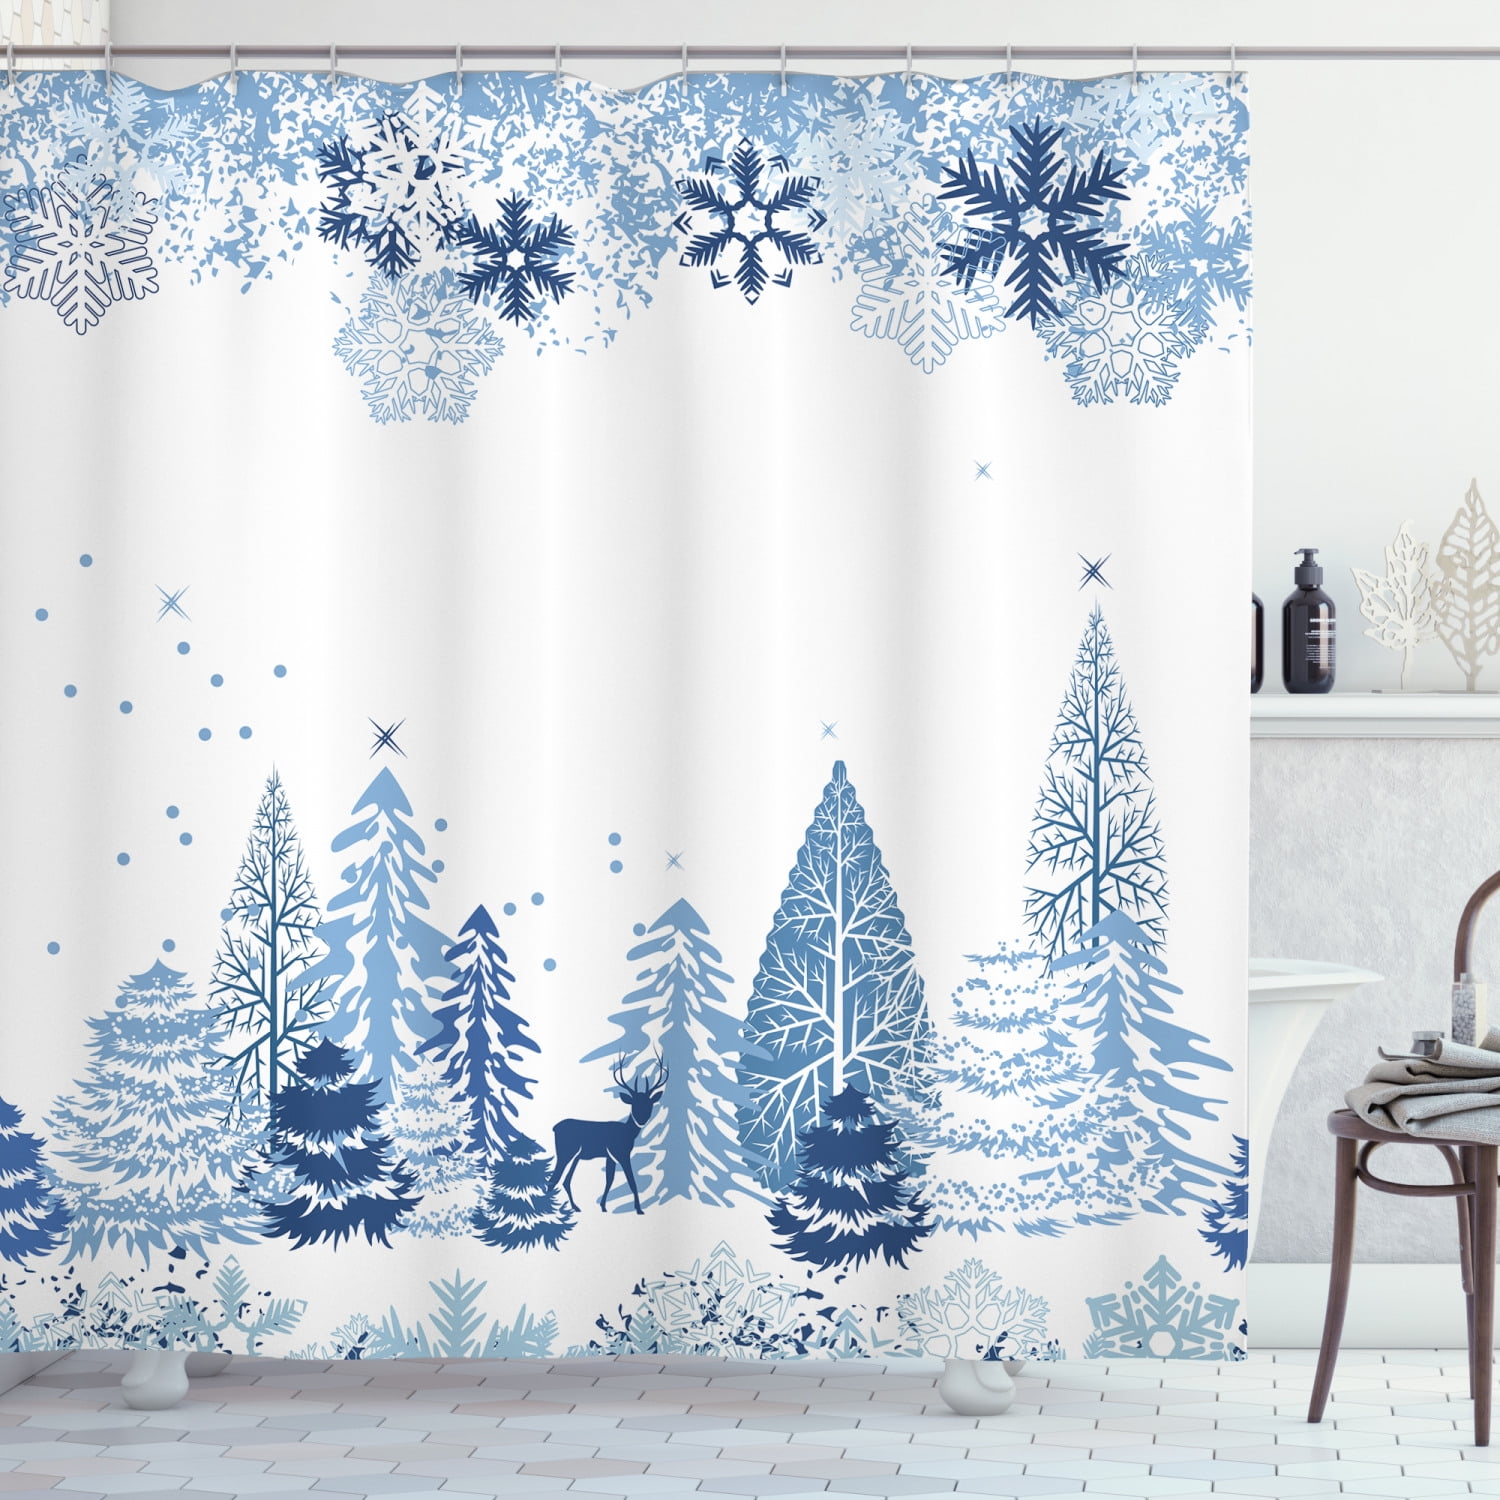 Winter Holiday Snowflakes Blue Background Xmas Shower Curtain Set Bathroom Decor 